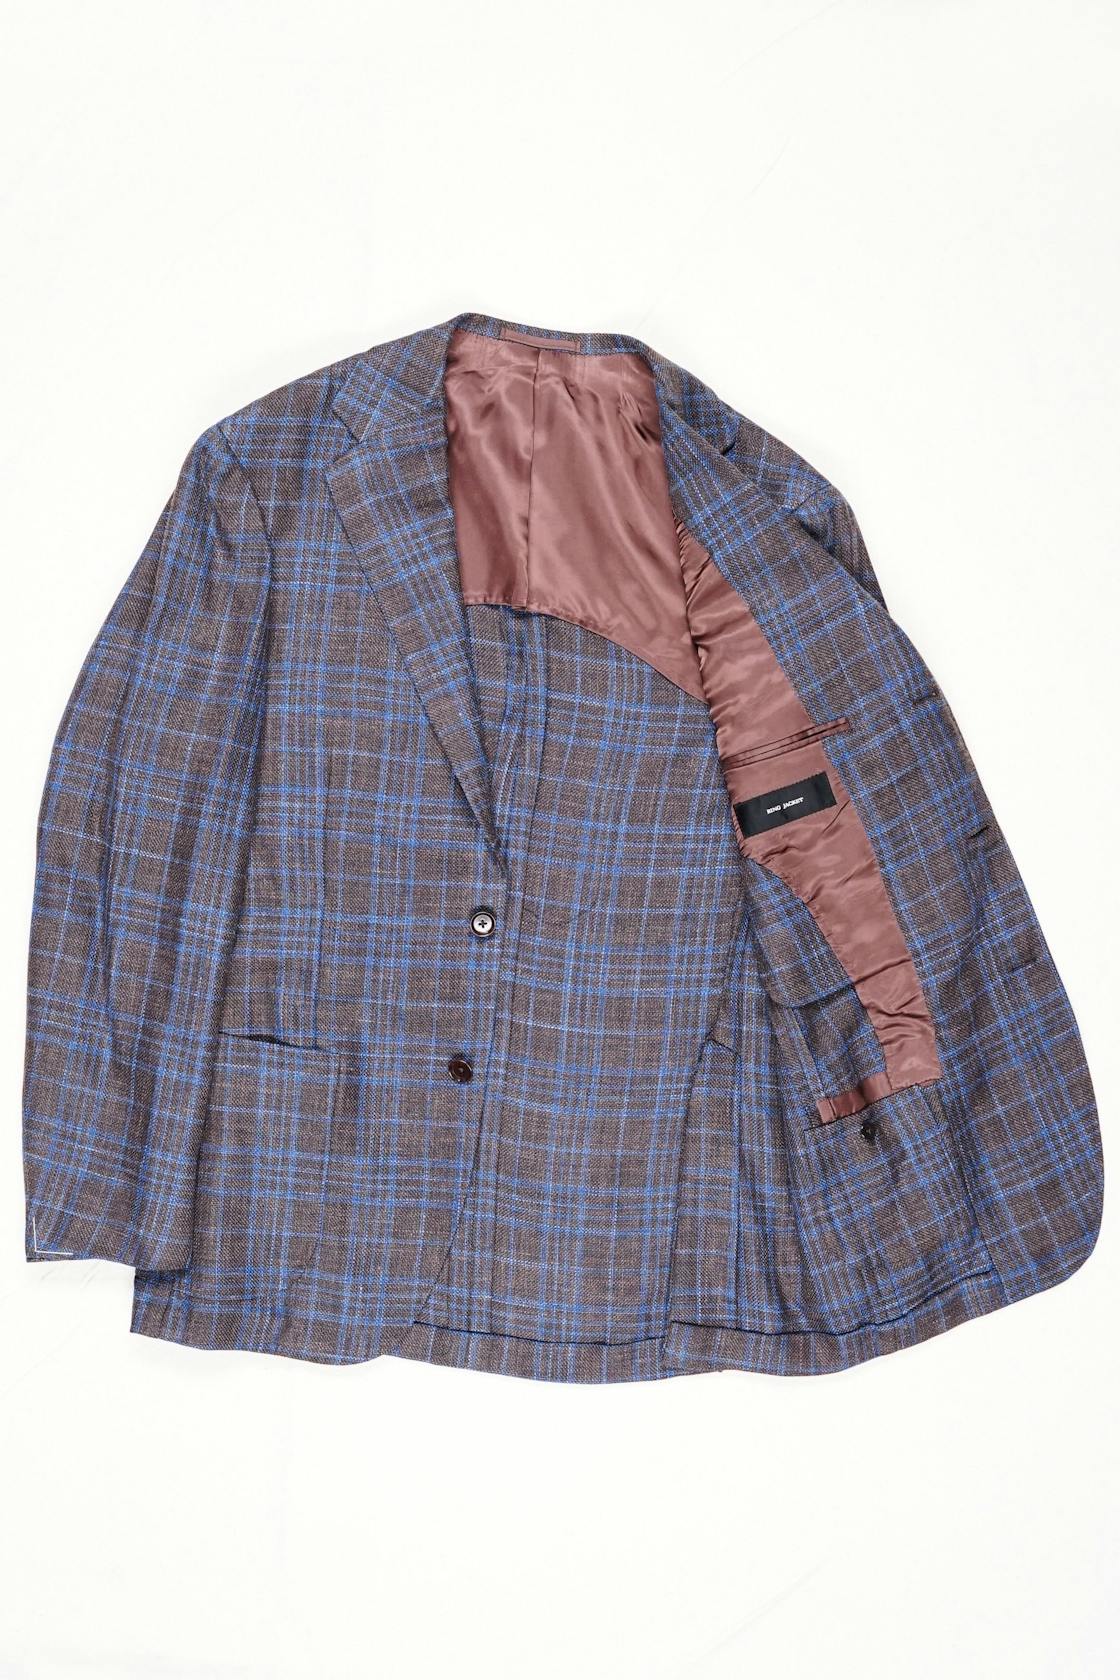 Ring Jacket TAJ-02 Brown/Blue Check Balloon Wool Sport Coat